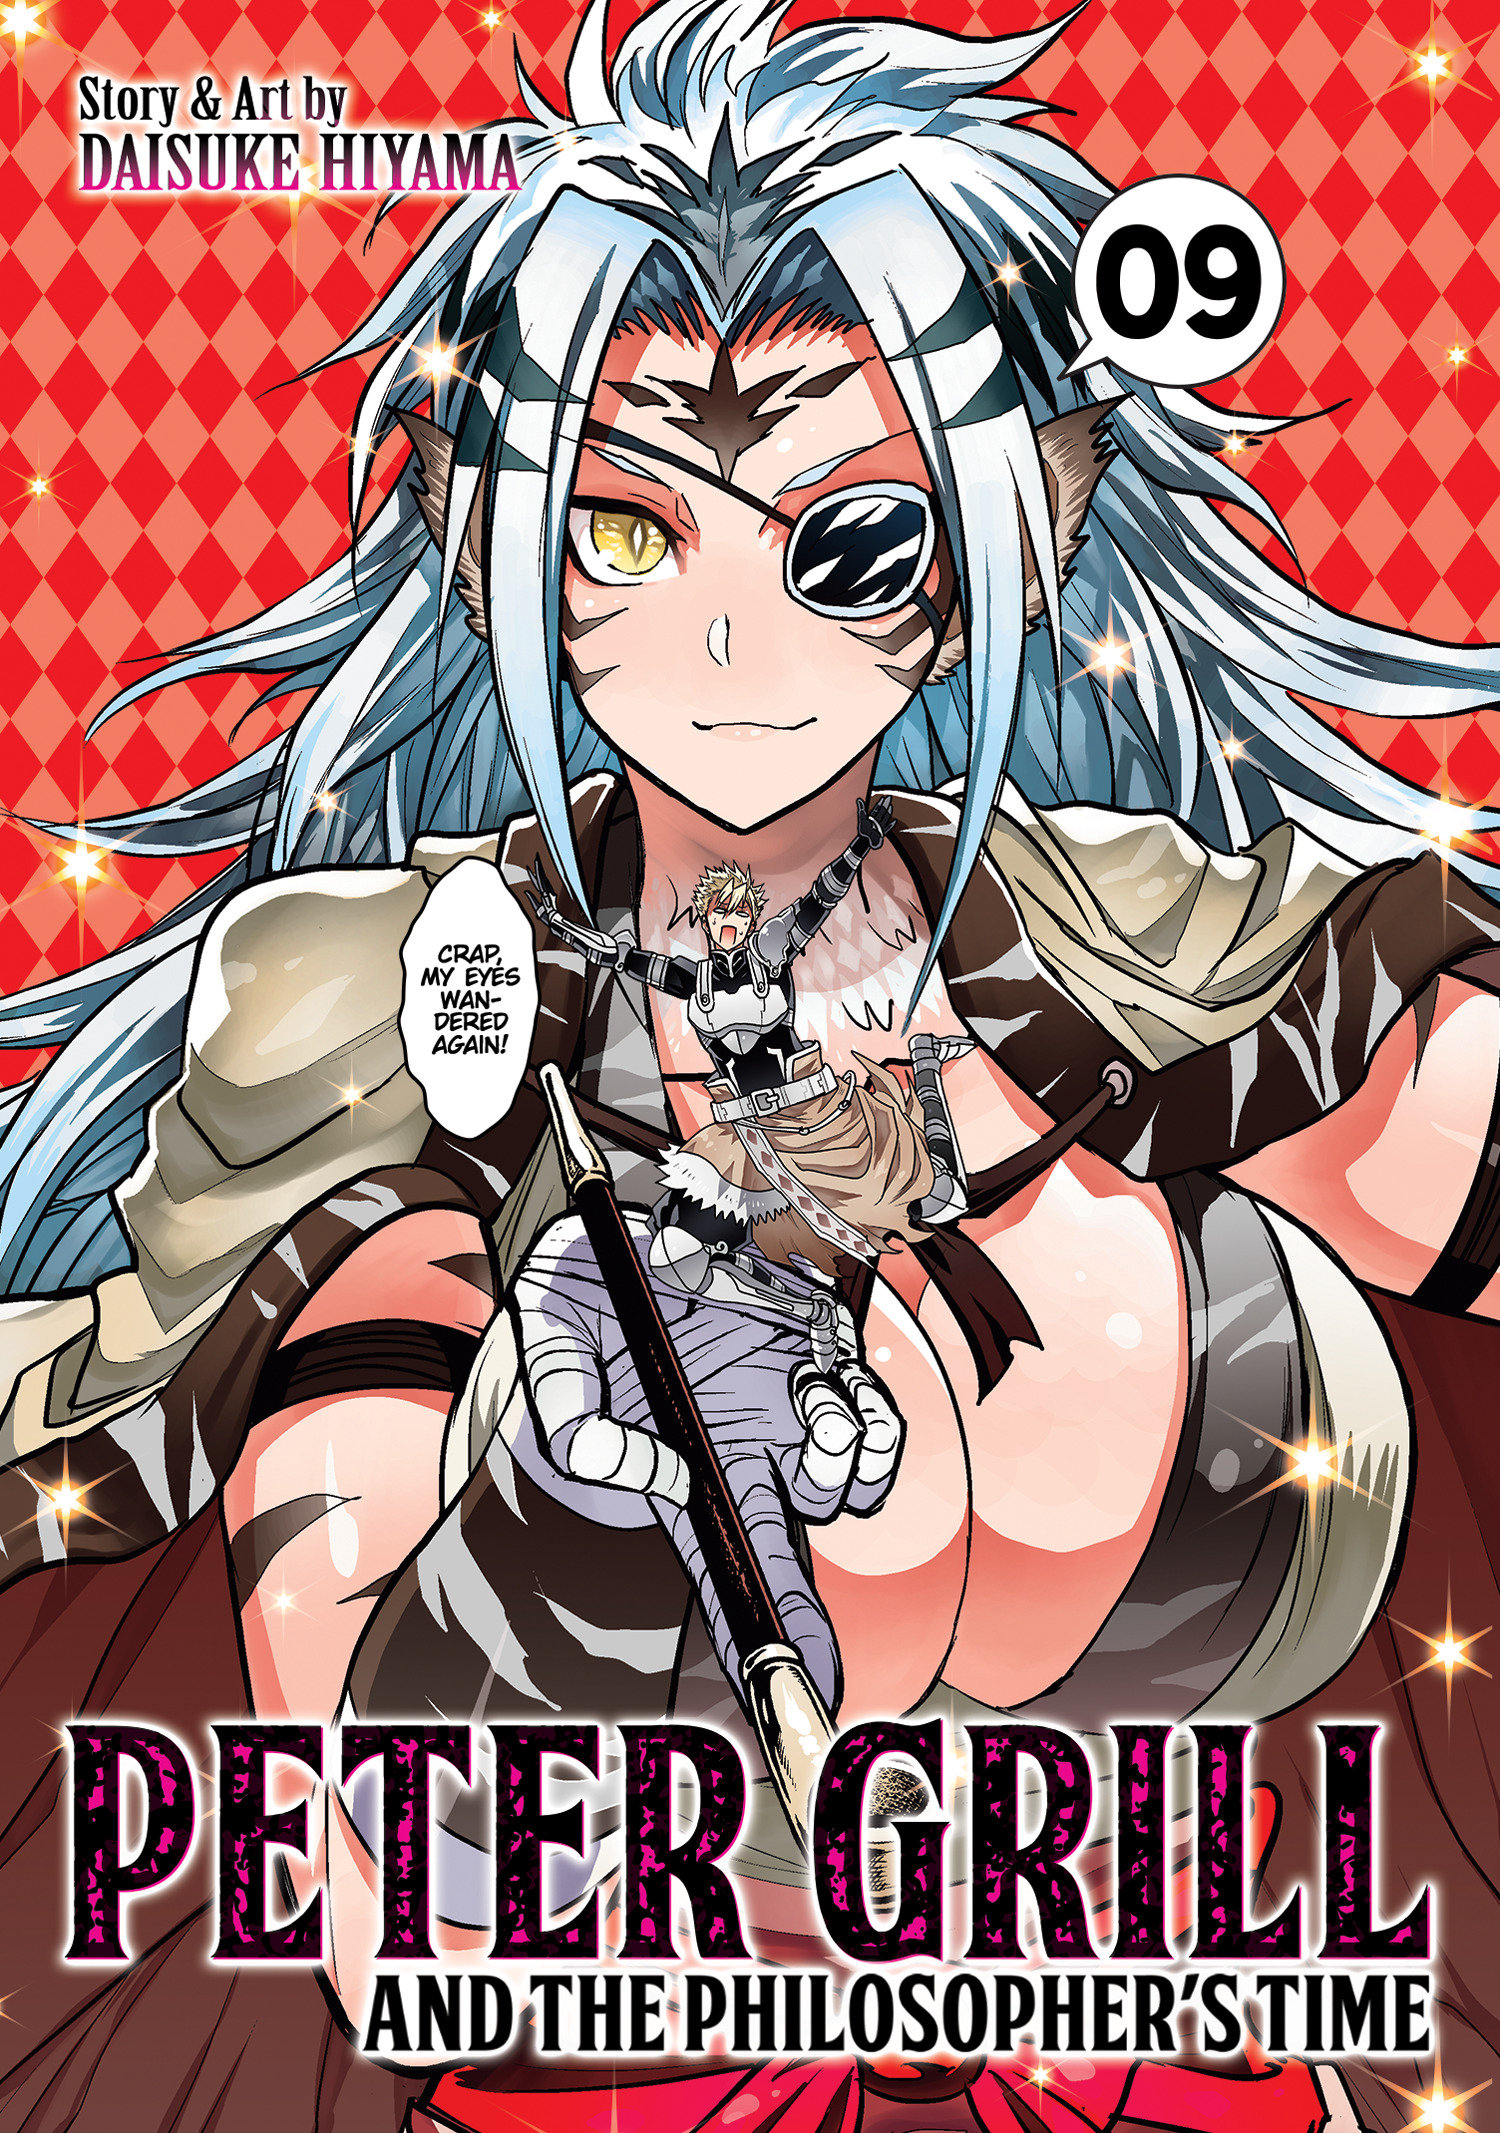 Peter Grill & the Philosophers Time Manga Volume 9 (Mature)